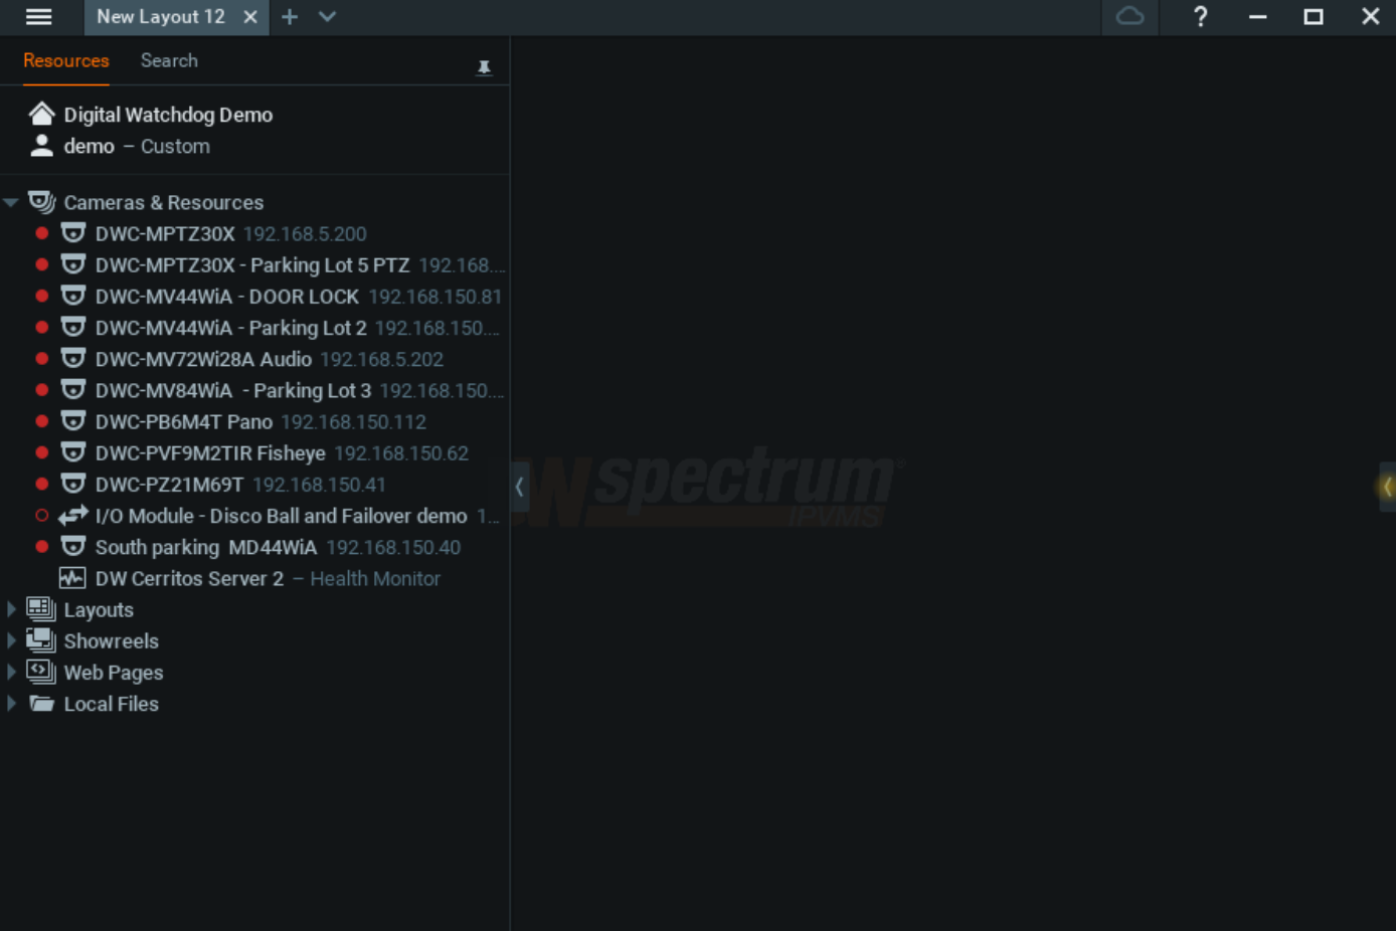 dw spectrum download for windows